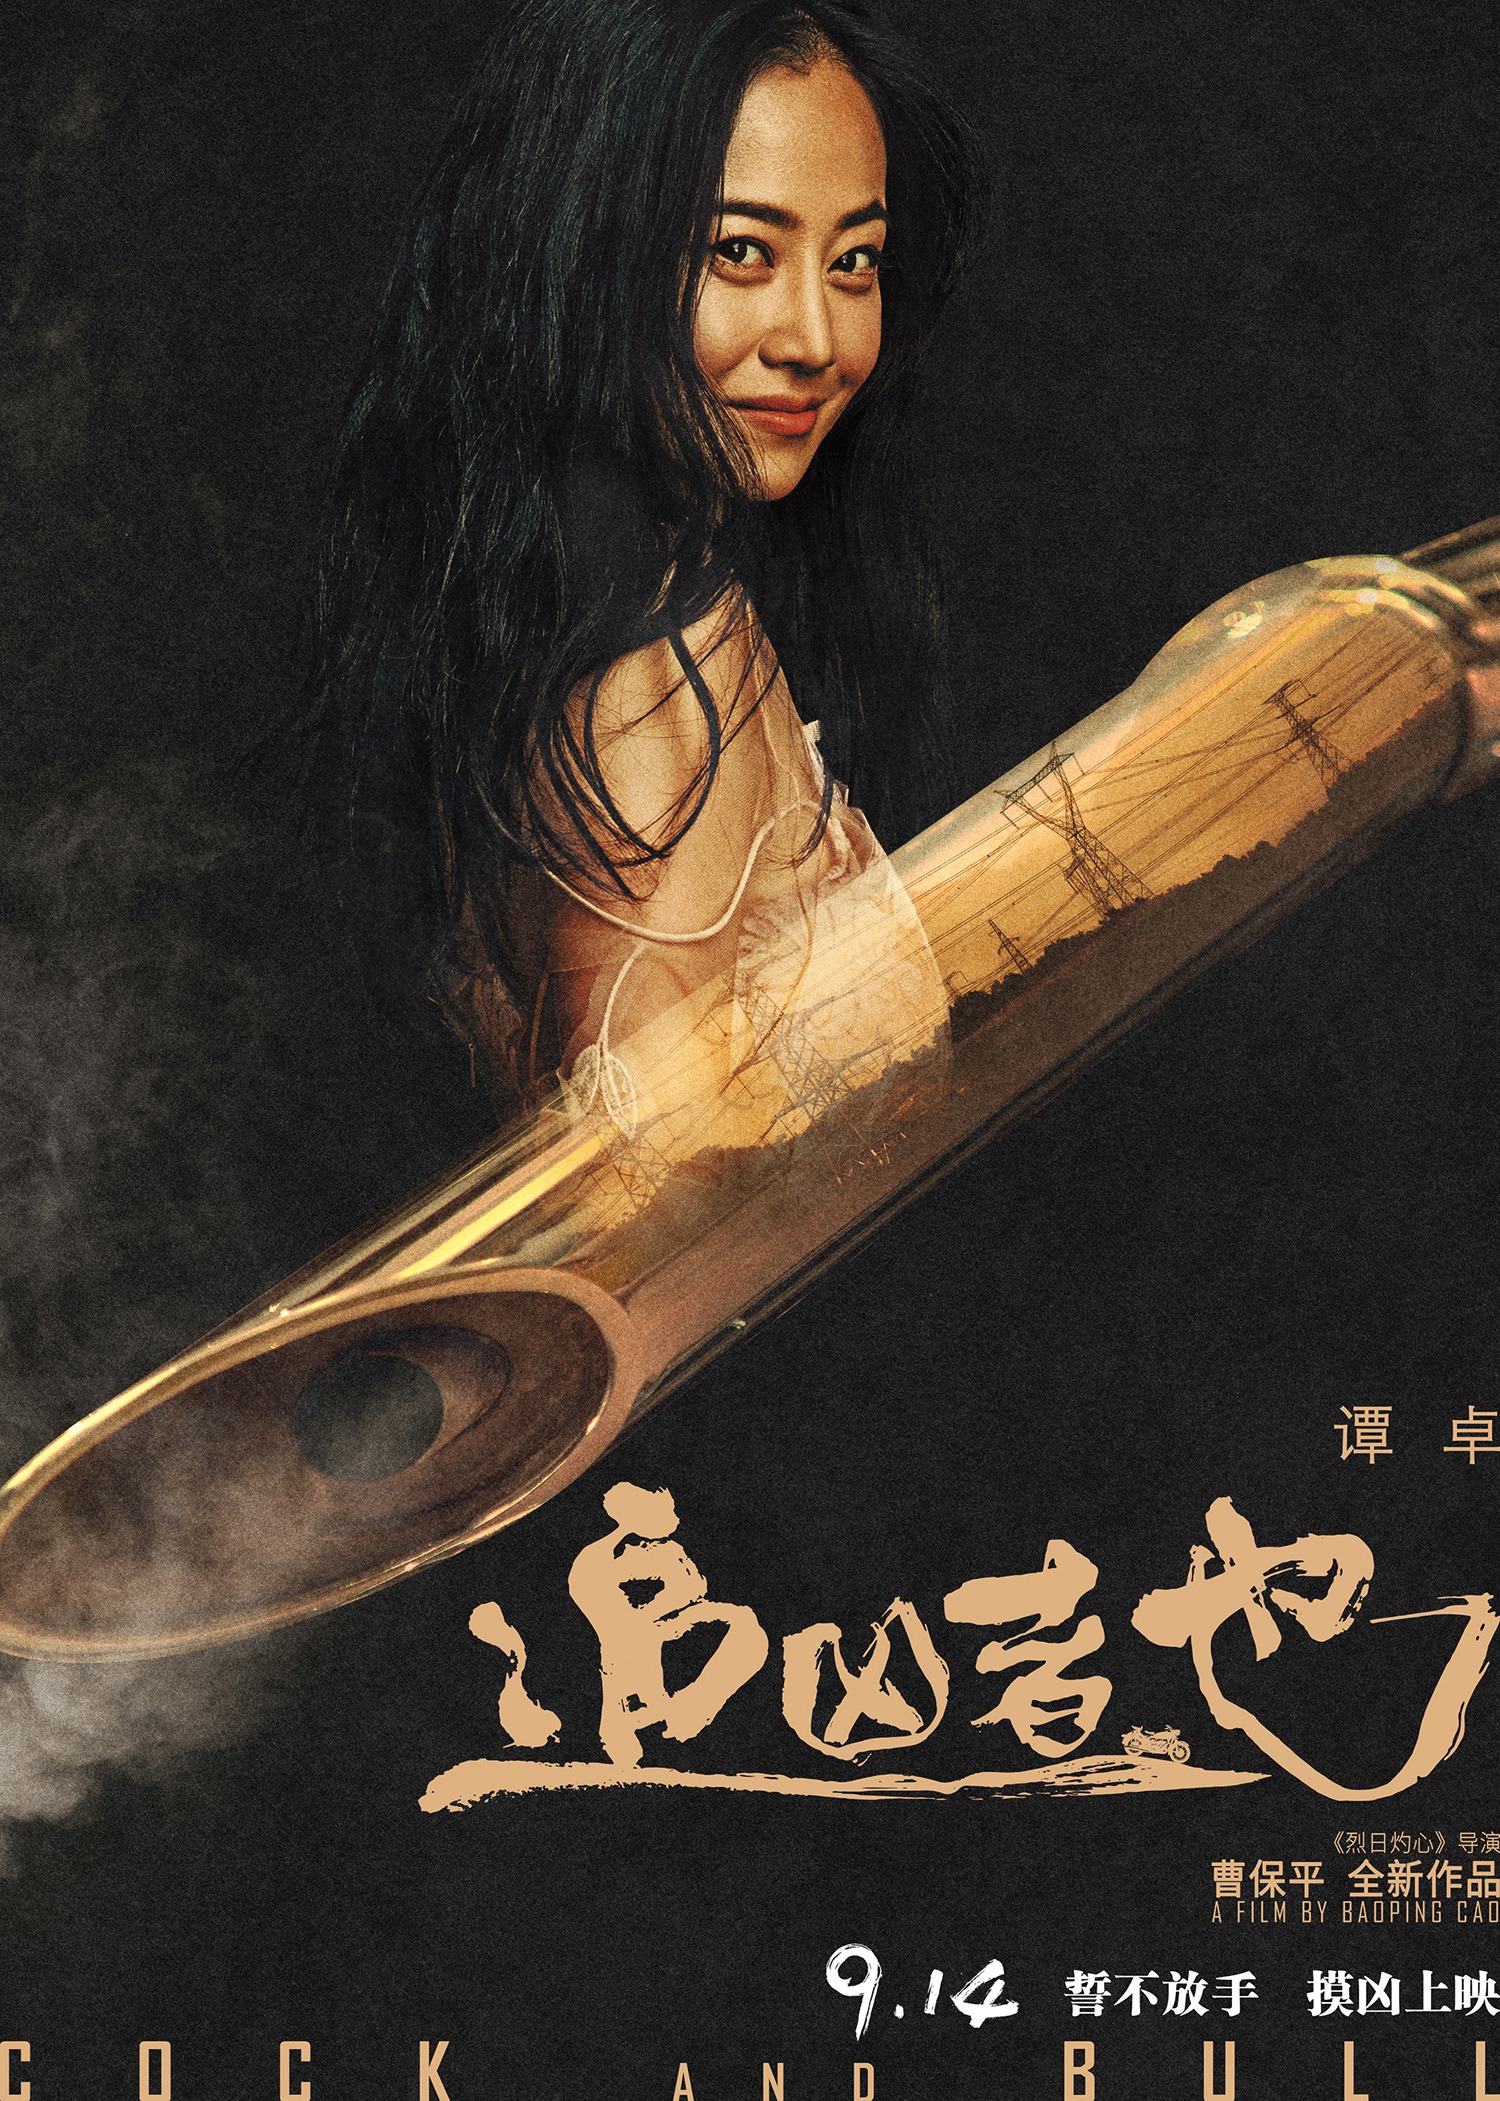 Mega Sized Movie Poster Image for Zhui xiong zhe ye (#13 of 16)